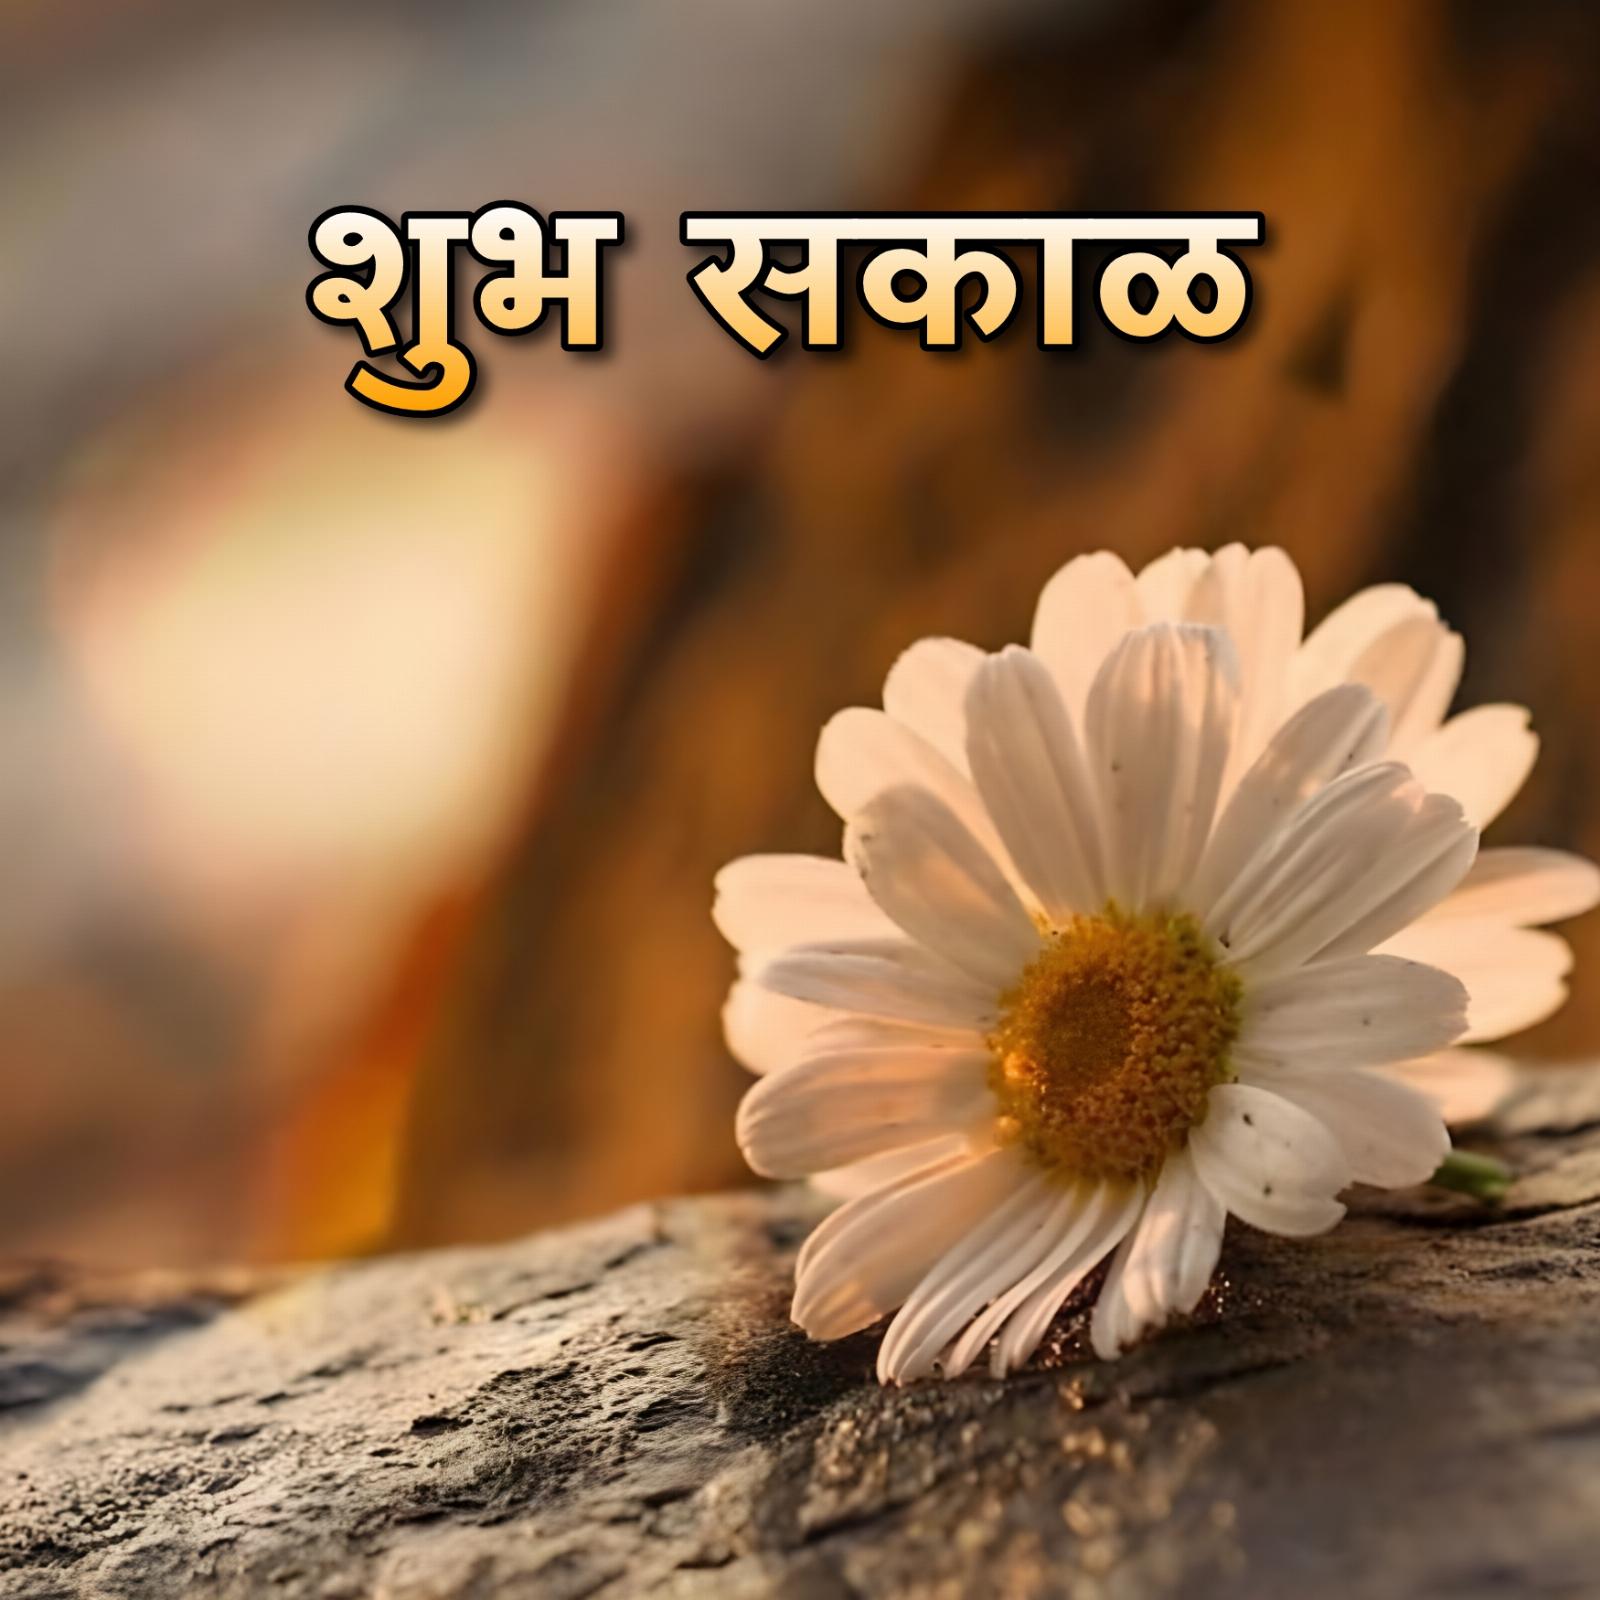 Shubh Sakal Flower Images Hd Download